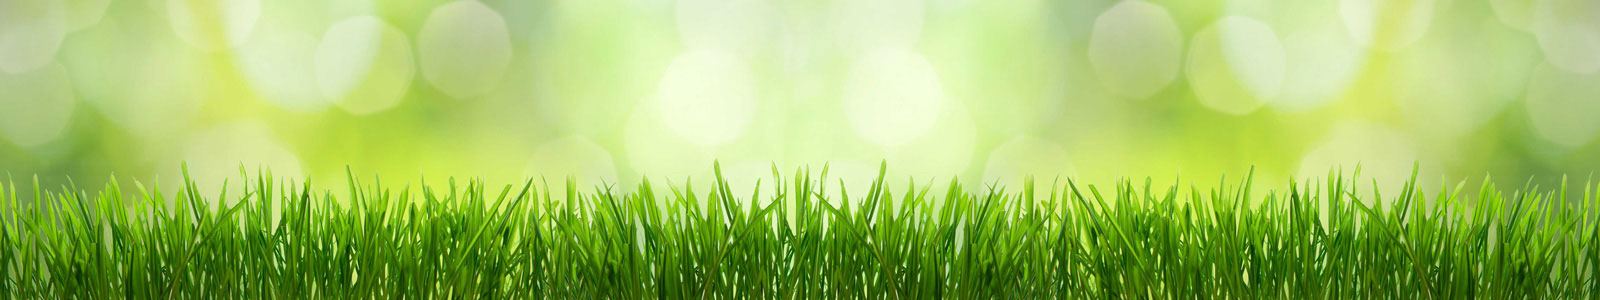 №2413 - Сочная зеленая трава на светло-зеленом фоне